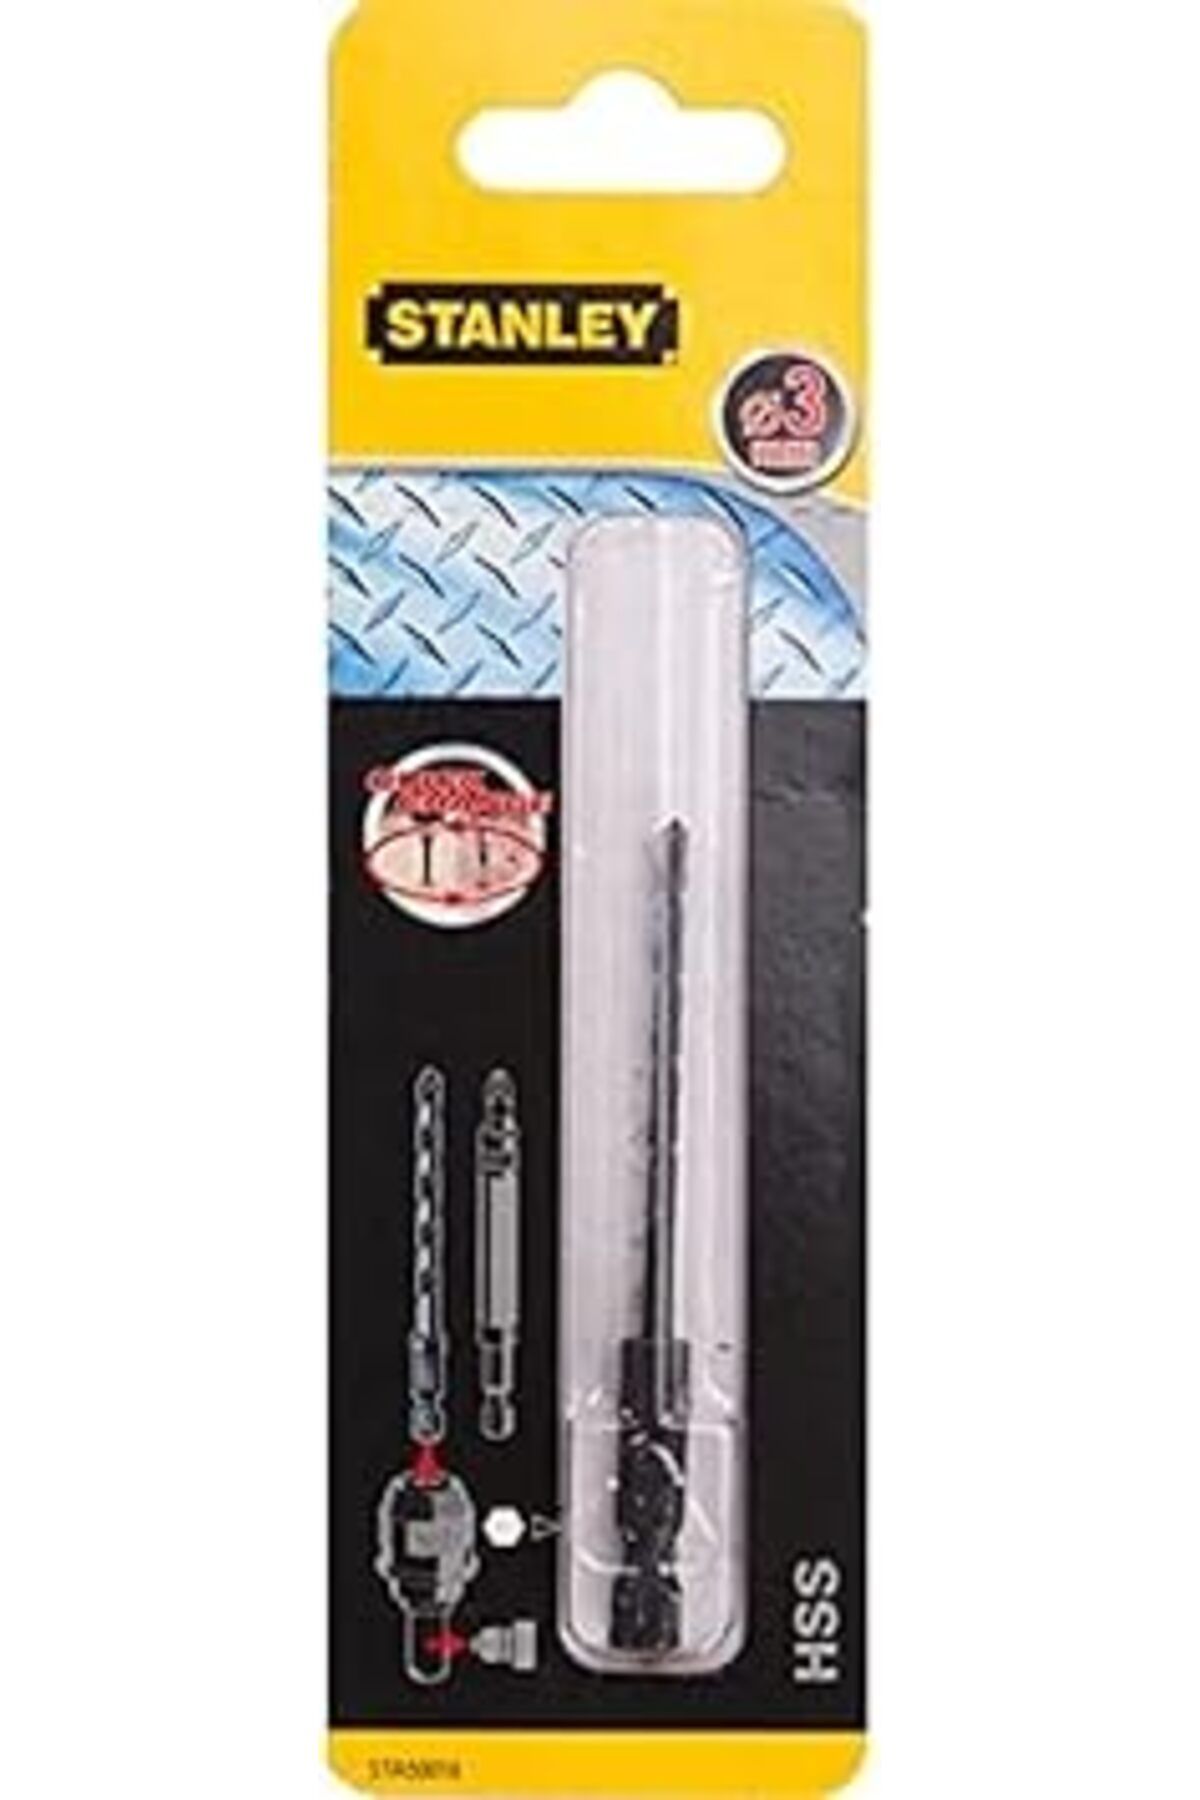 Stanley Sta50018 Metal Matkap Ucu/Bits Giriş, Siyah, 1 Adet, 3 Mm  3mm